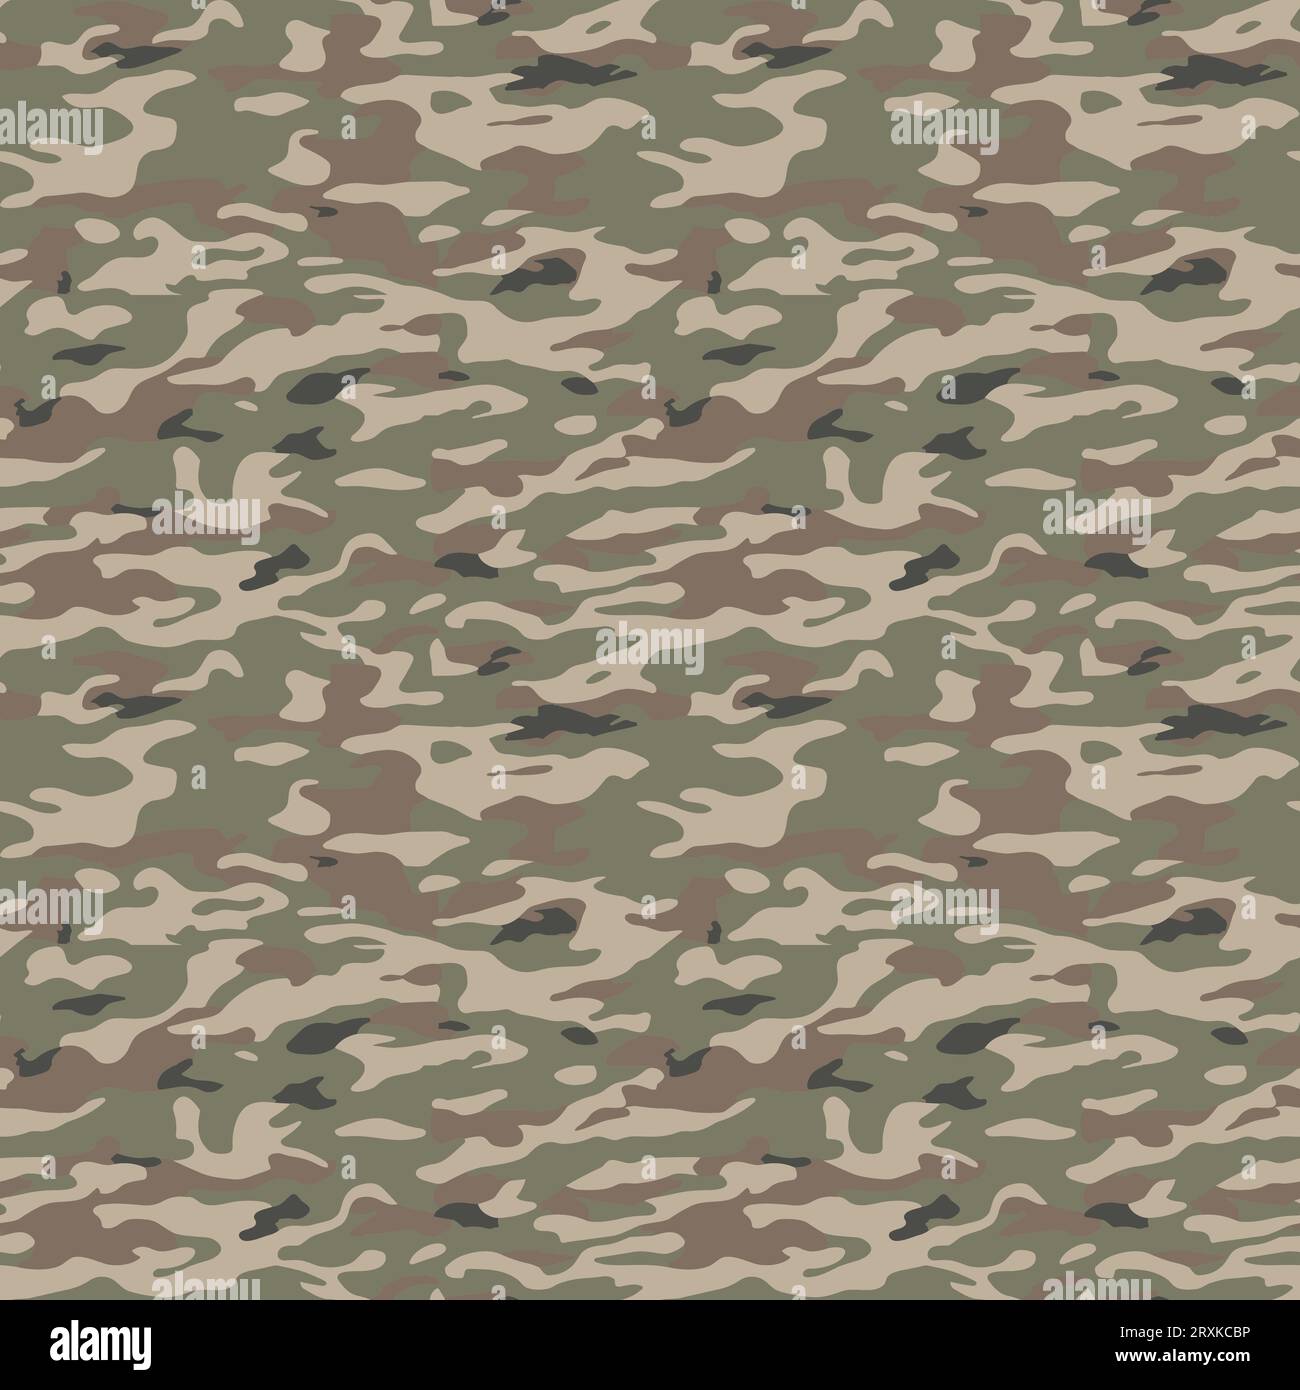 Army Camouflage Vektor nahtloses Muster, Camouflage Hintergrund Stock Vektor